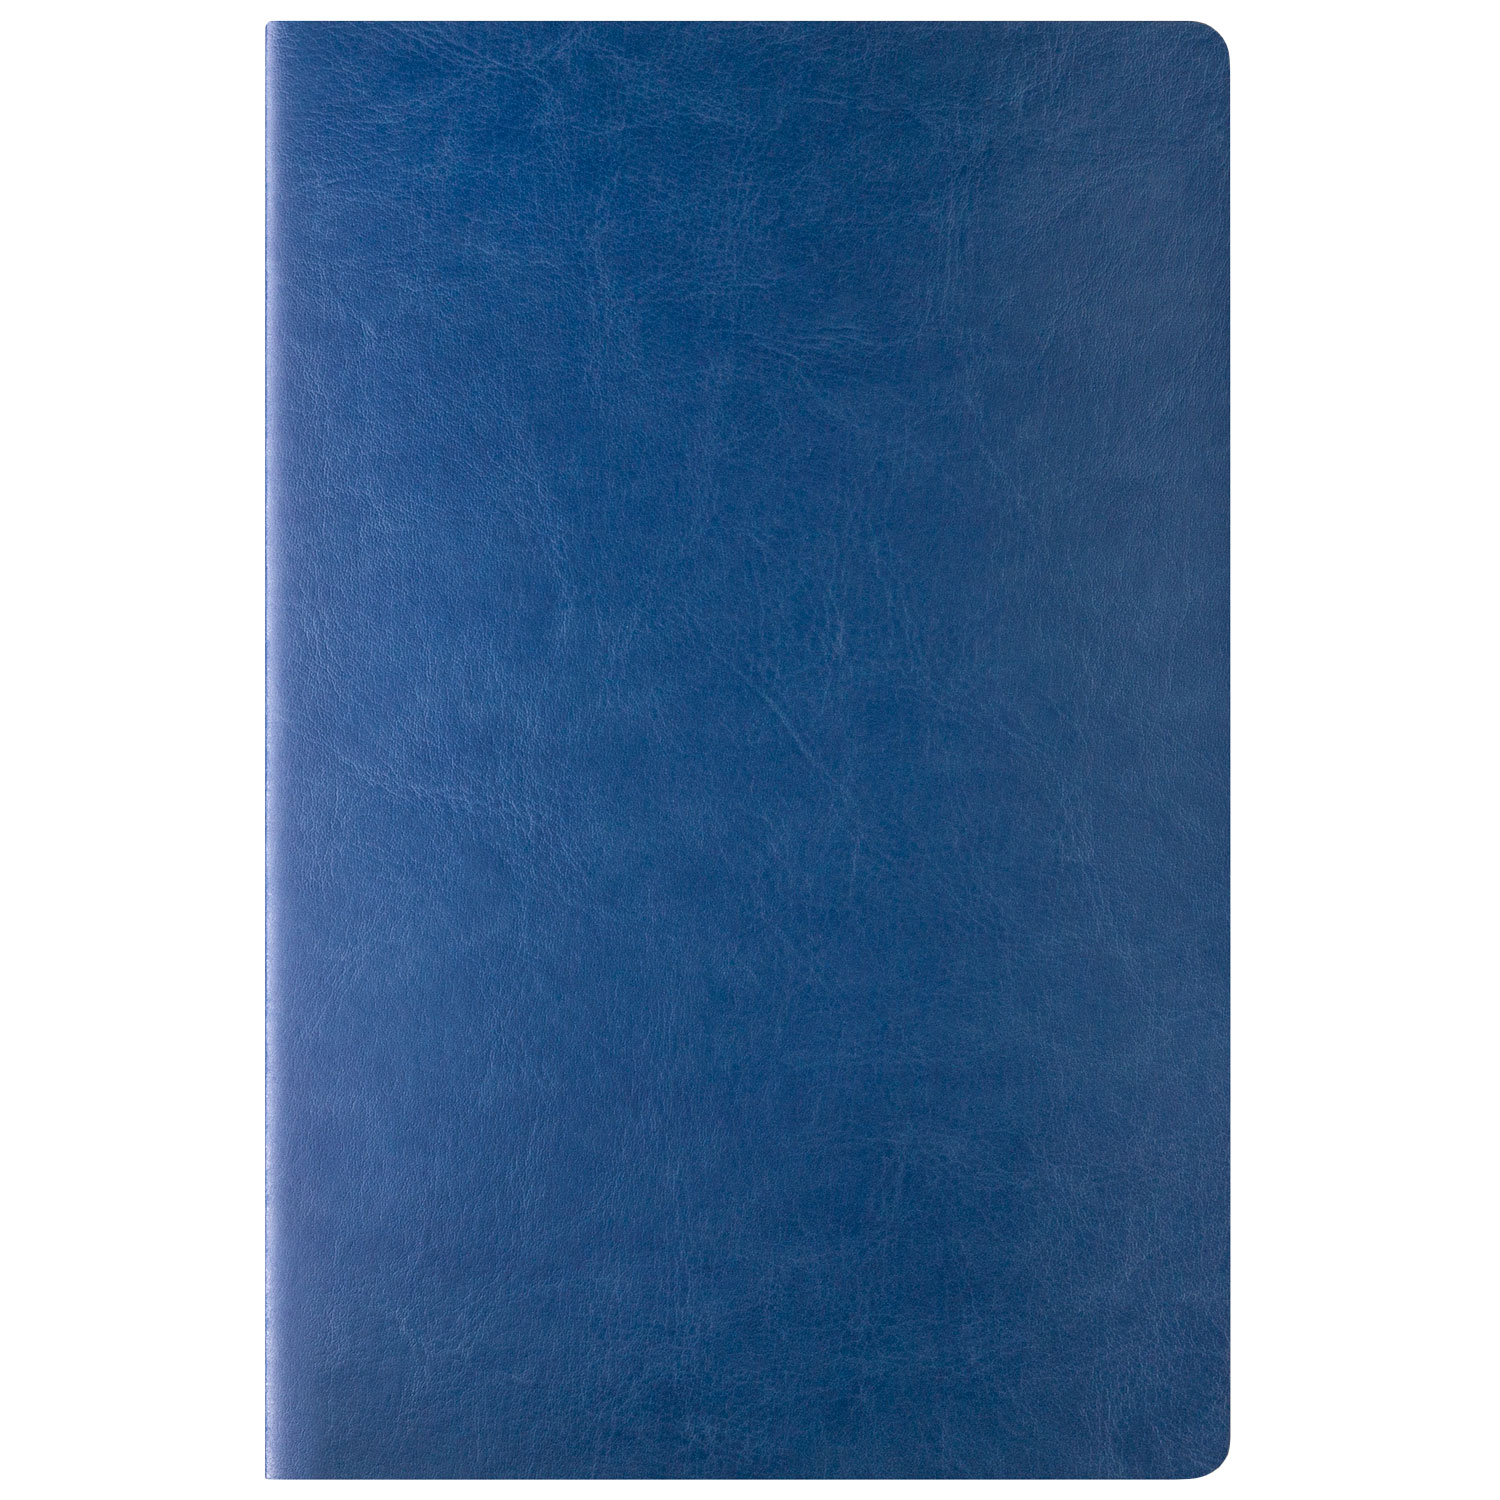  Portobello Notebook Trend, River side slim,/